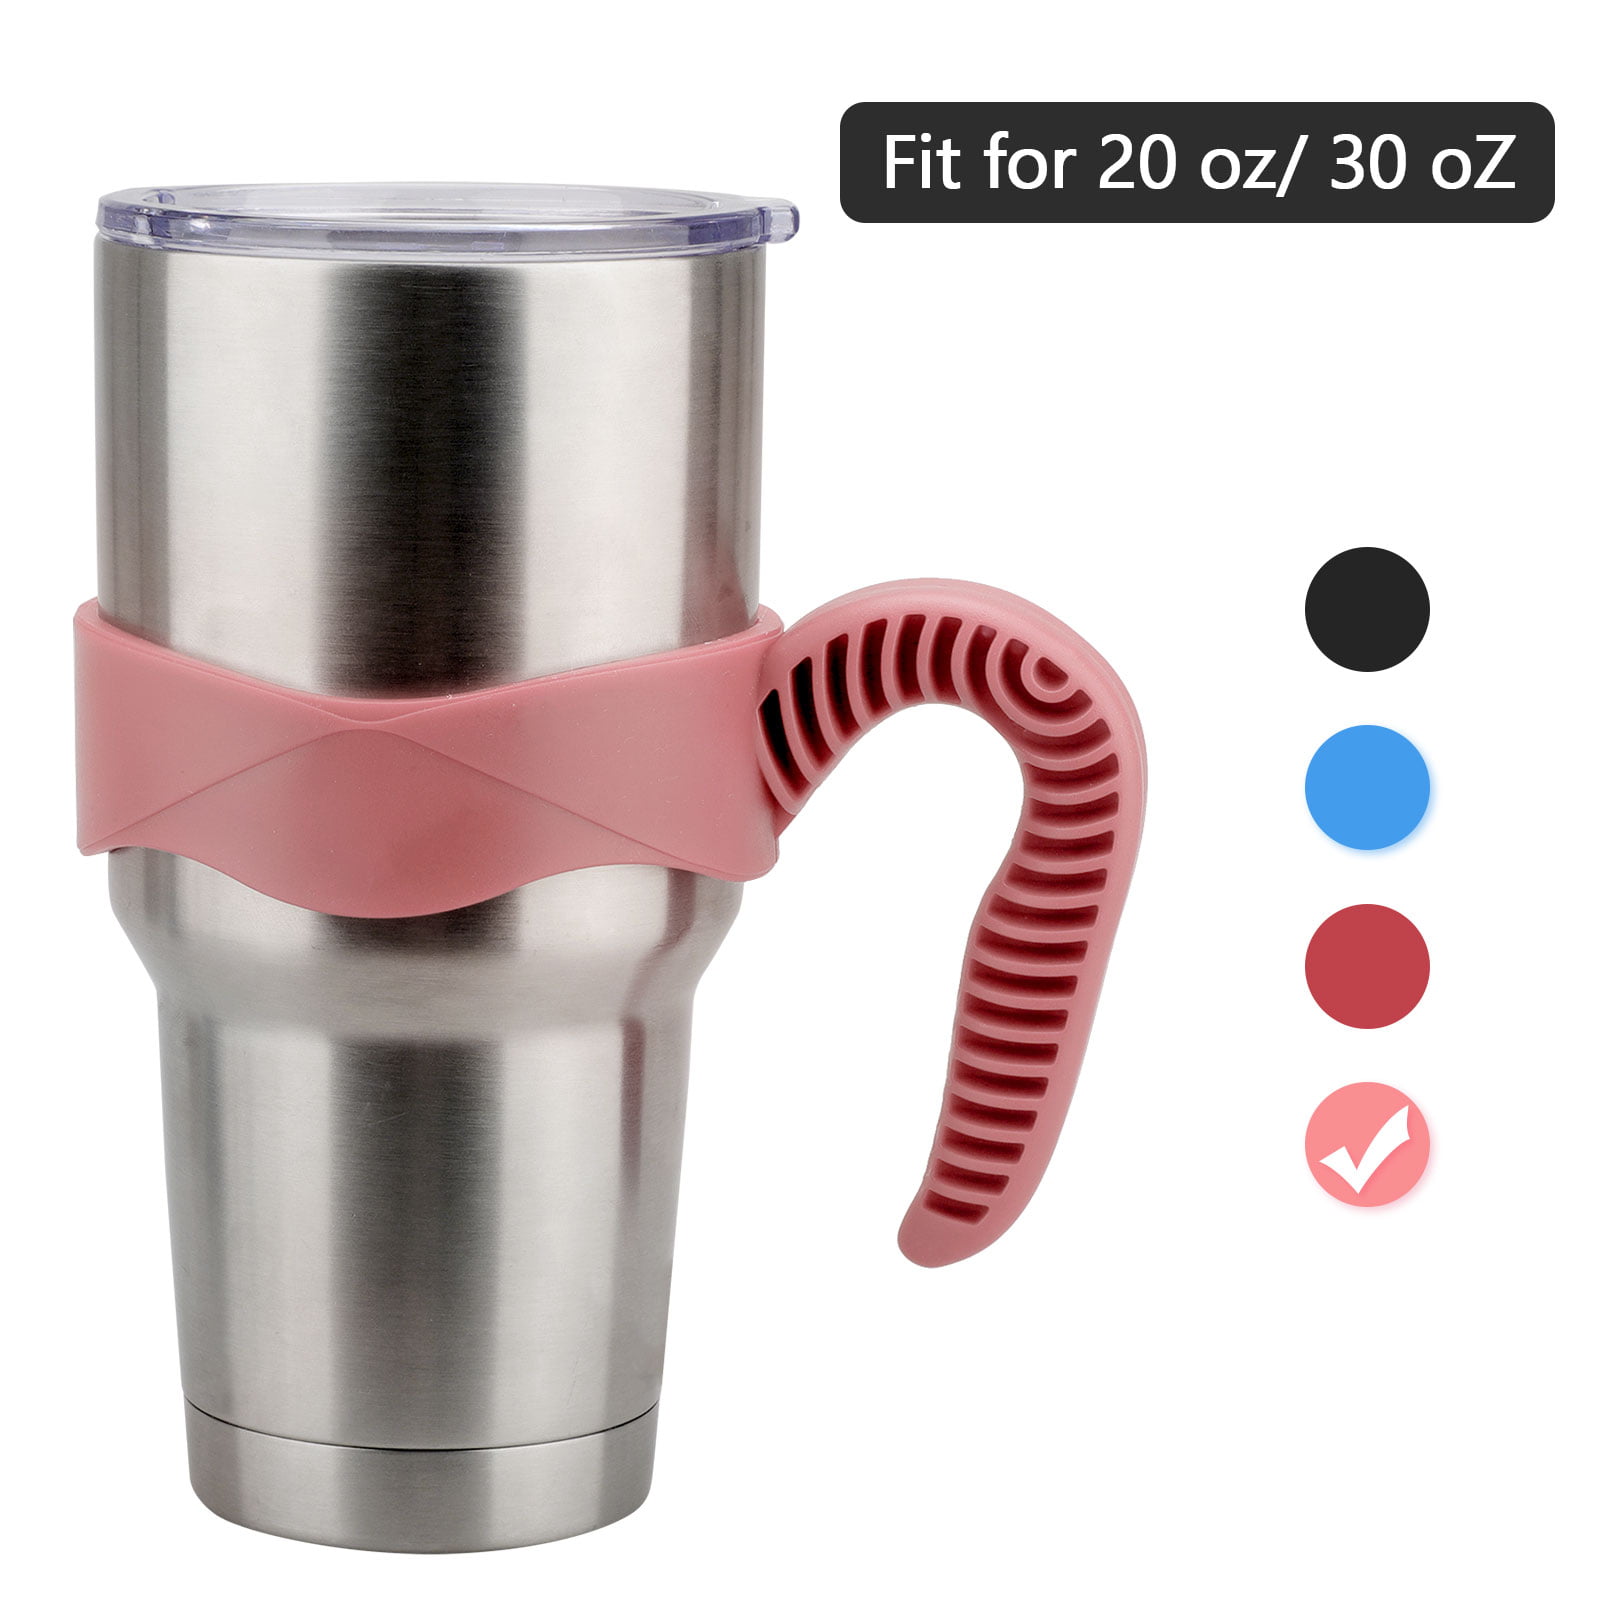 30 oz cup holder